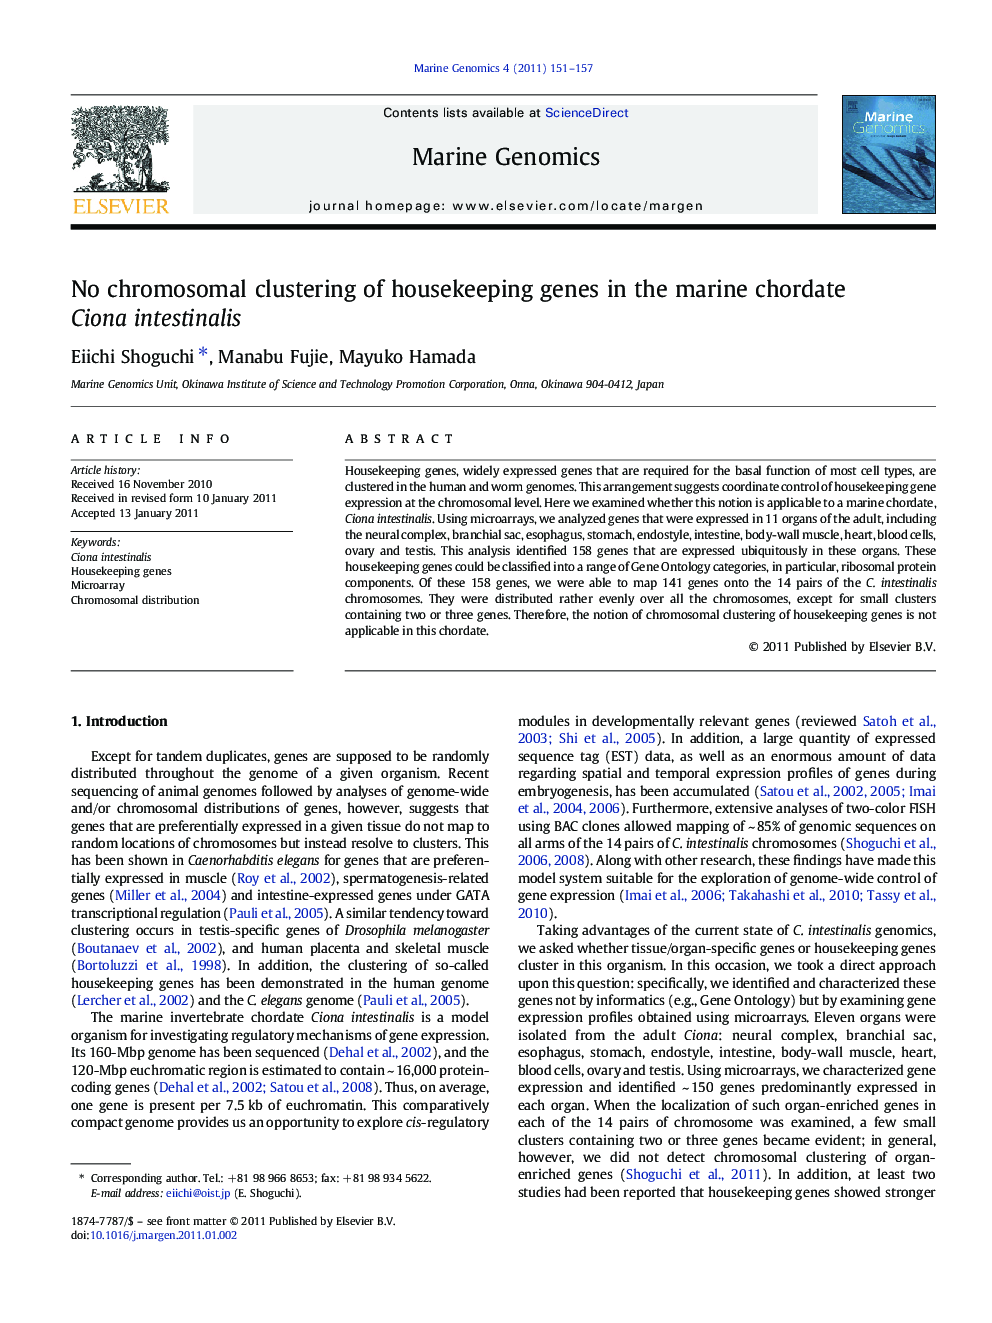 No chromosomal clustering of housekeeping genes in the marine chordate Ciona intestinalis